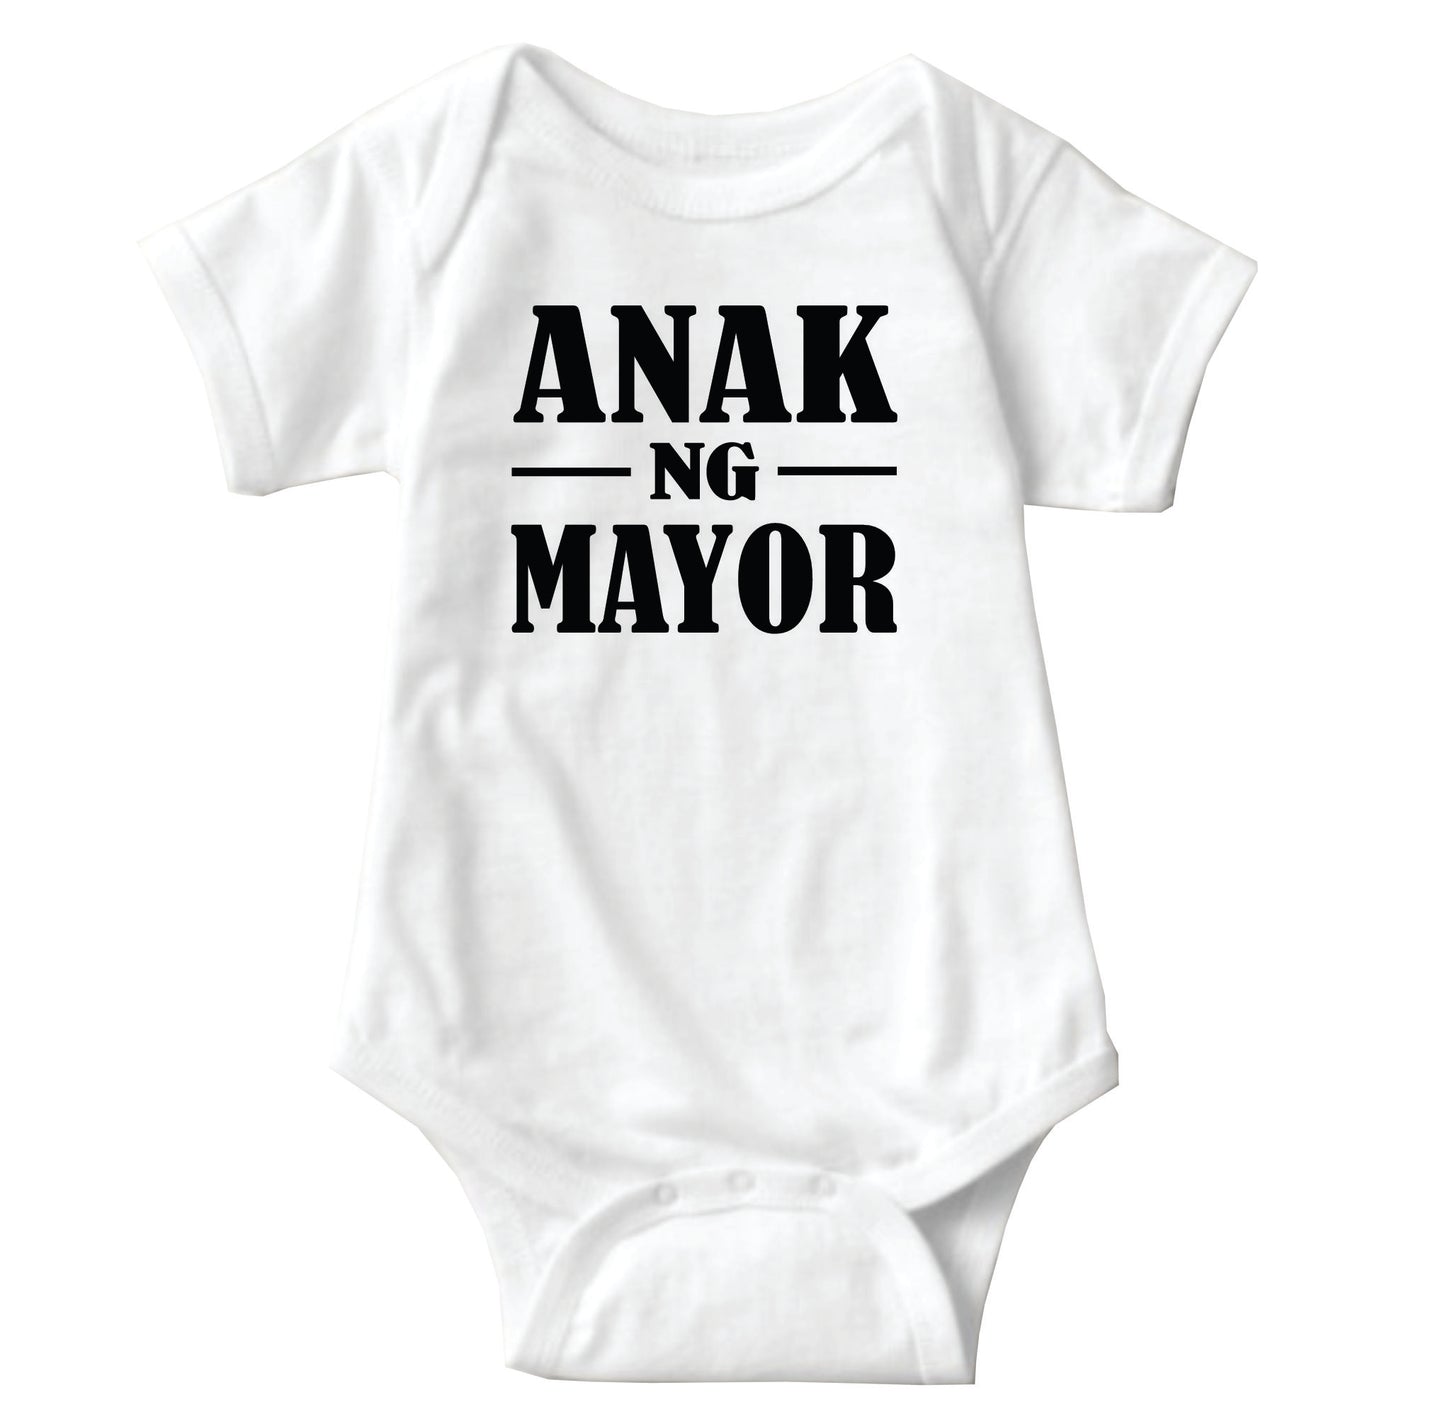 Baby Statement Onesies - Anak ng Mayor